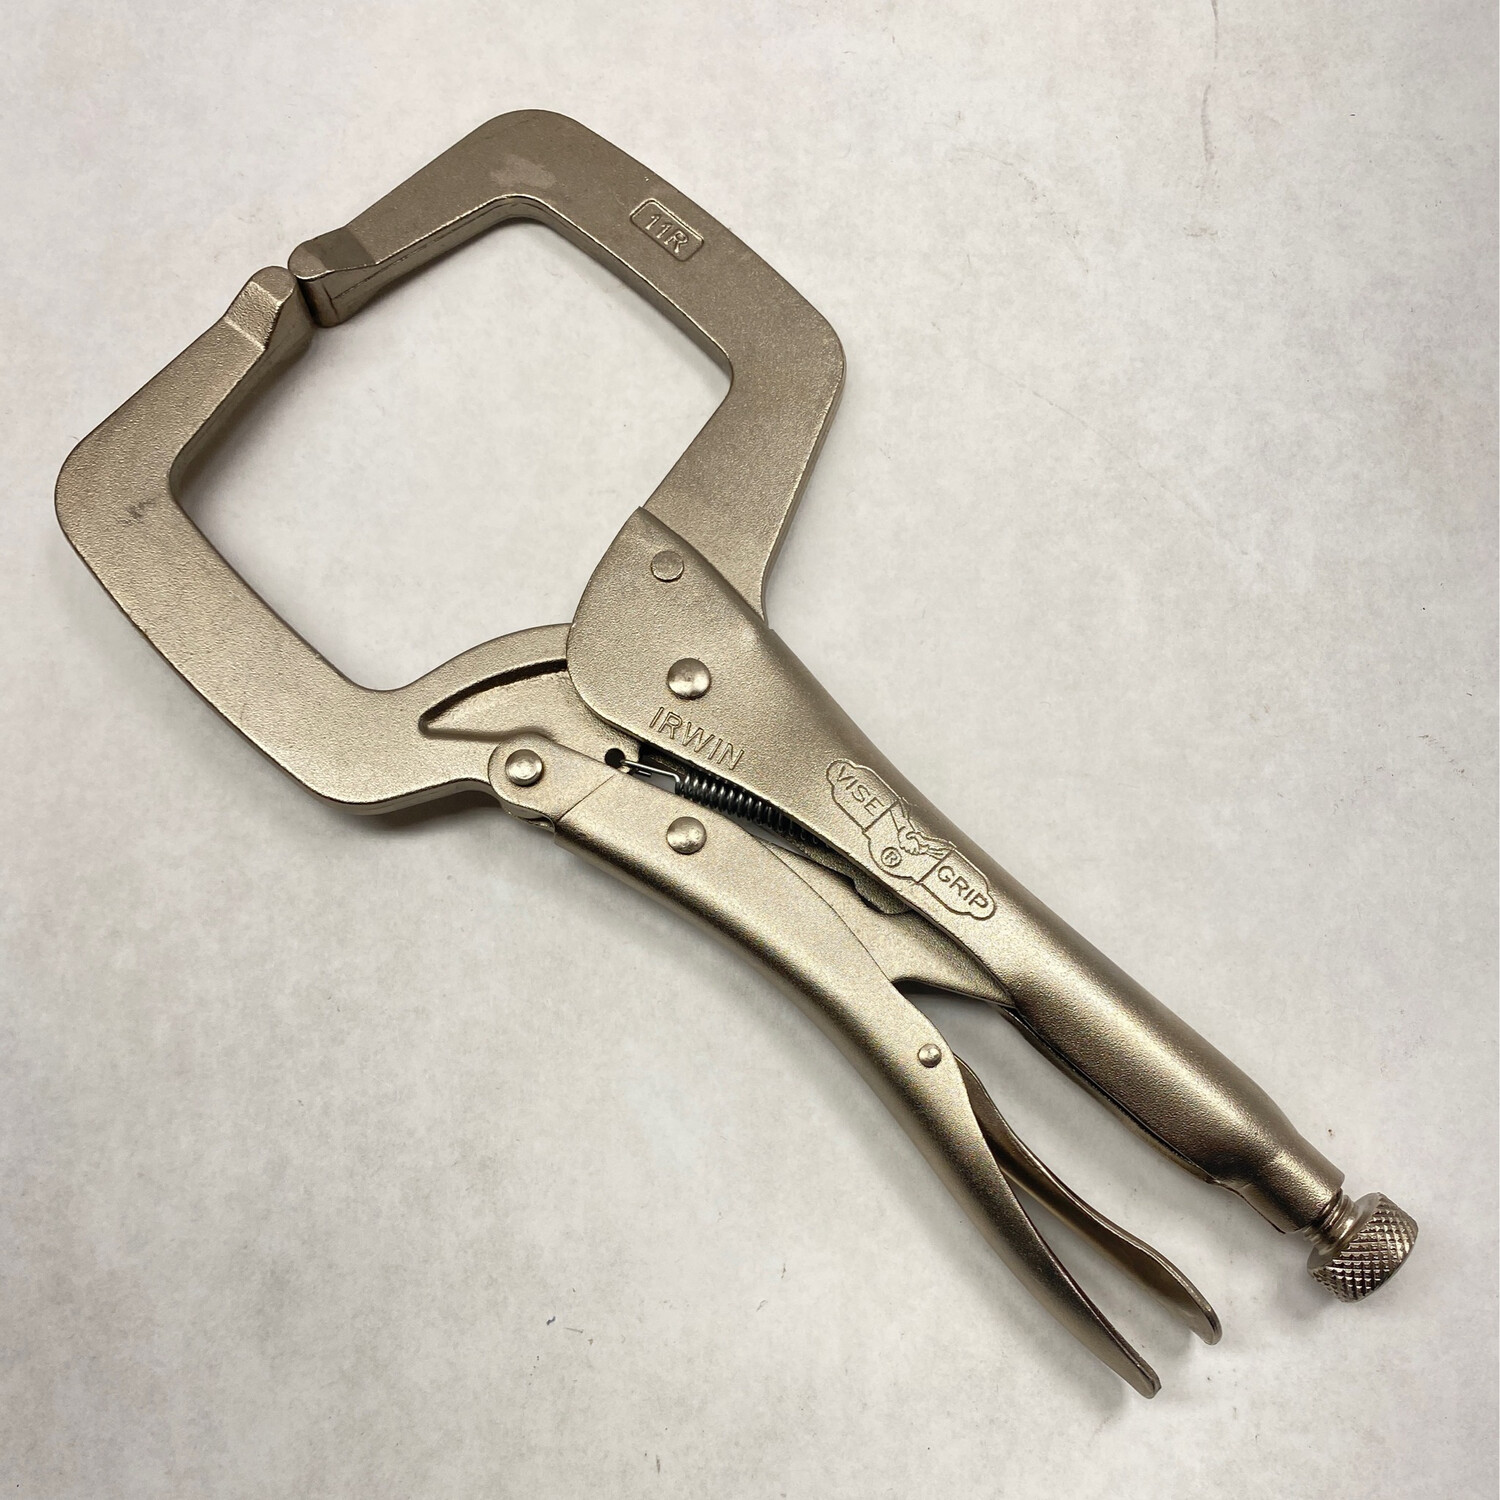 Irwin Vise Grip 11” C-Clamp Locking Pliers, 11R